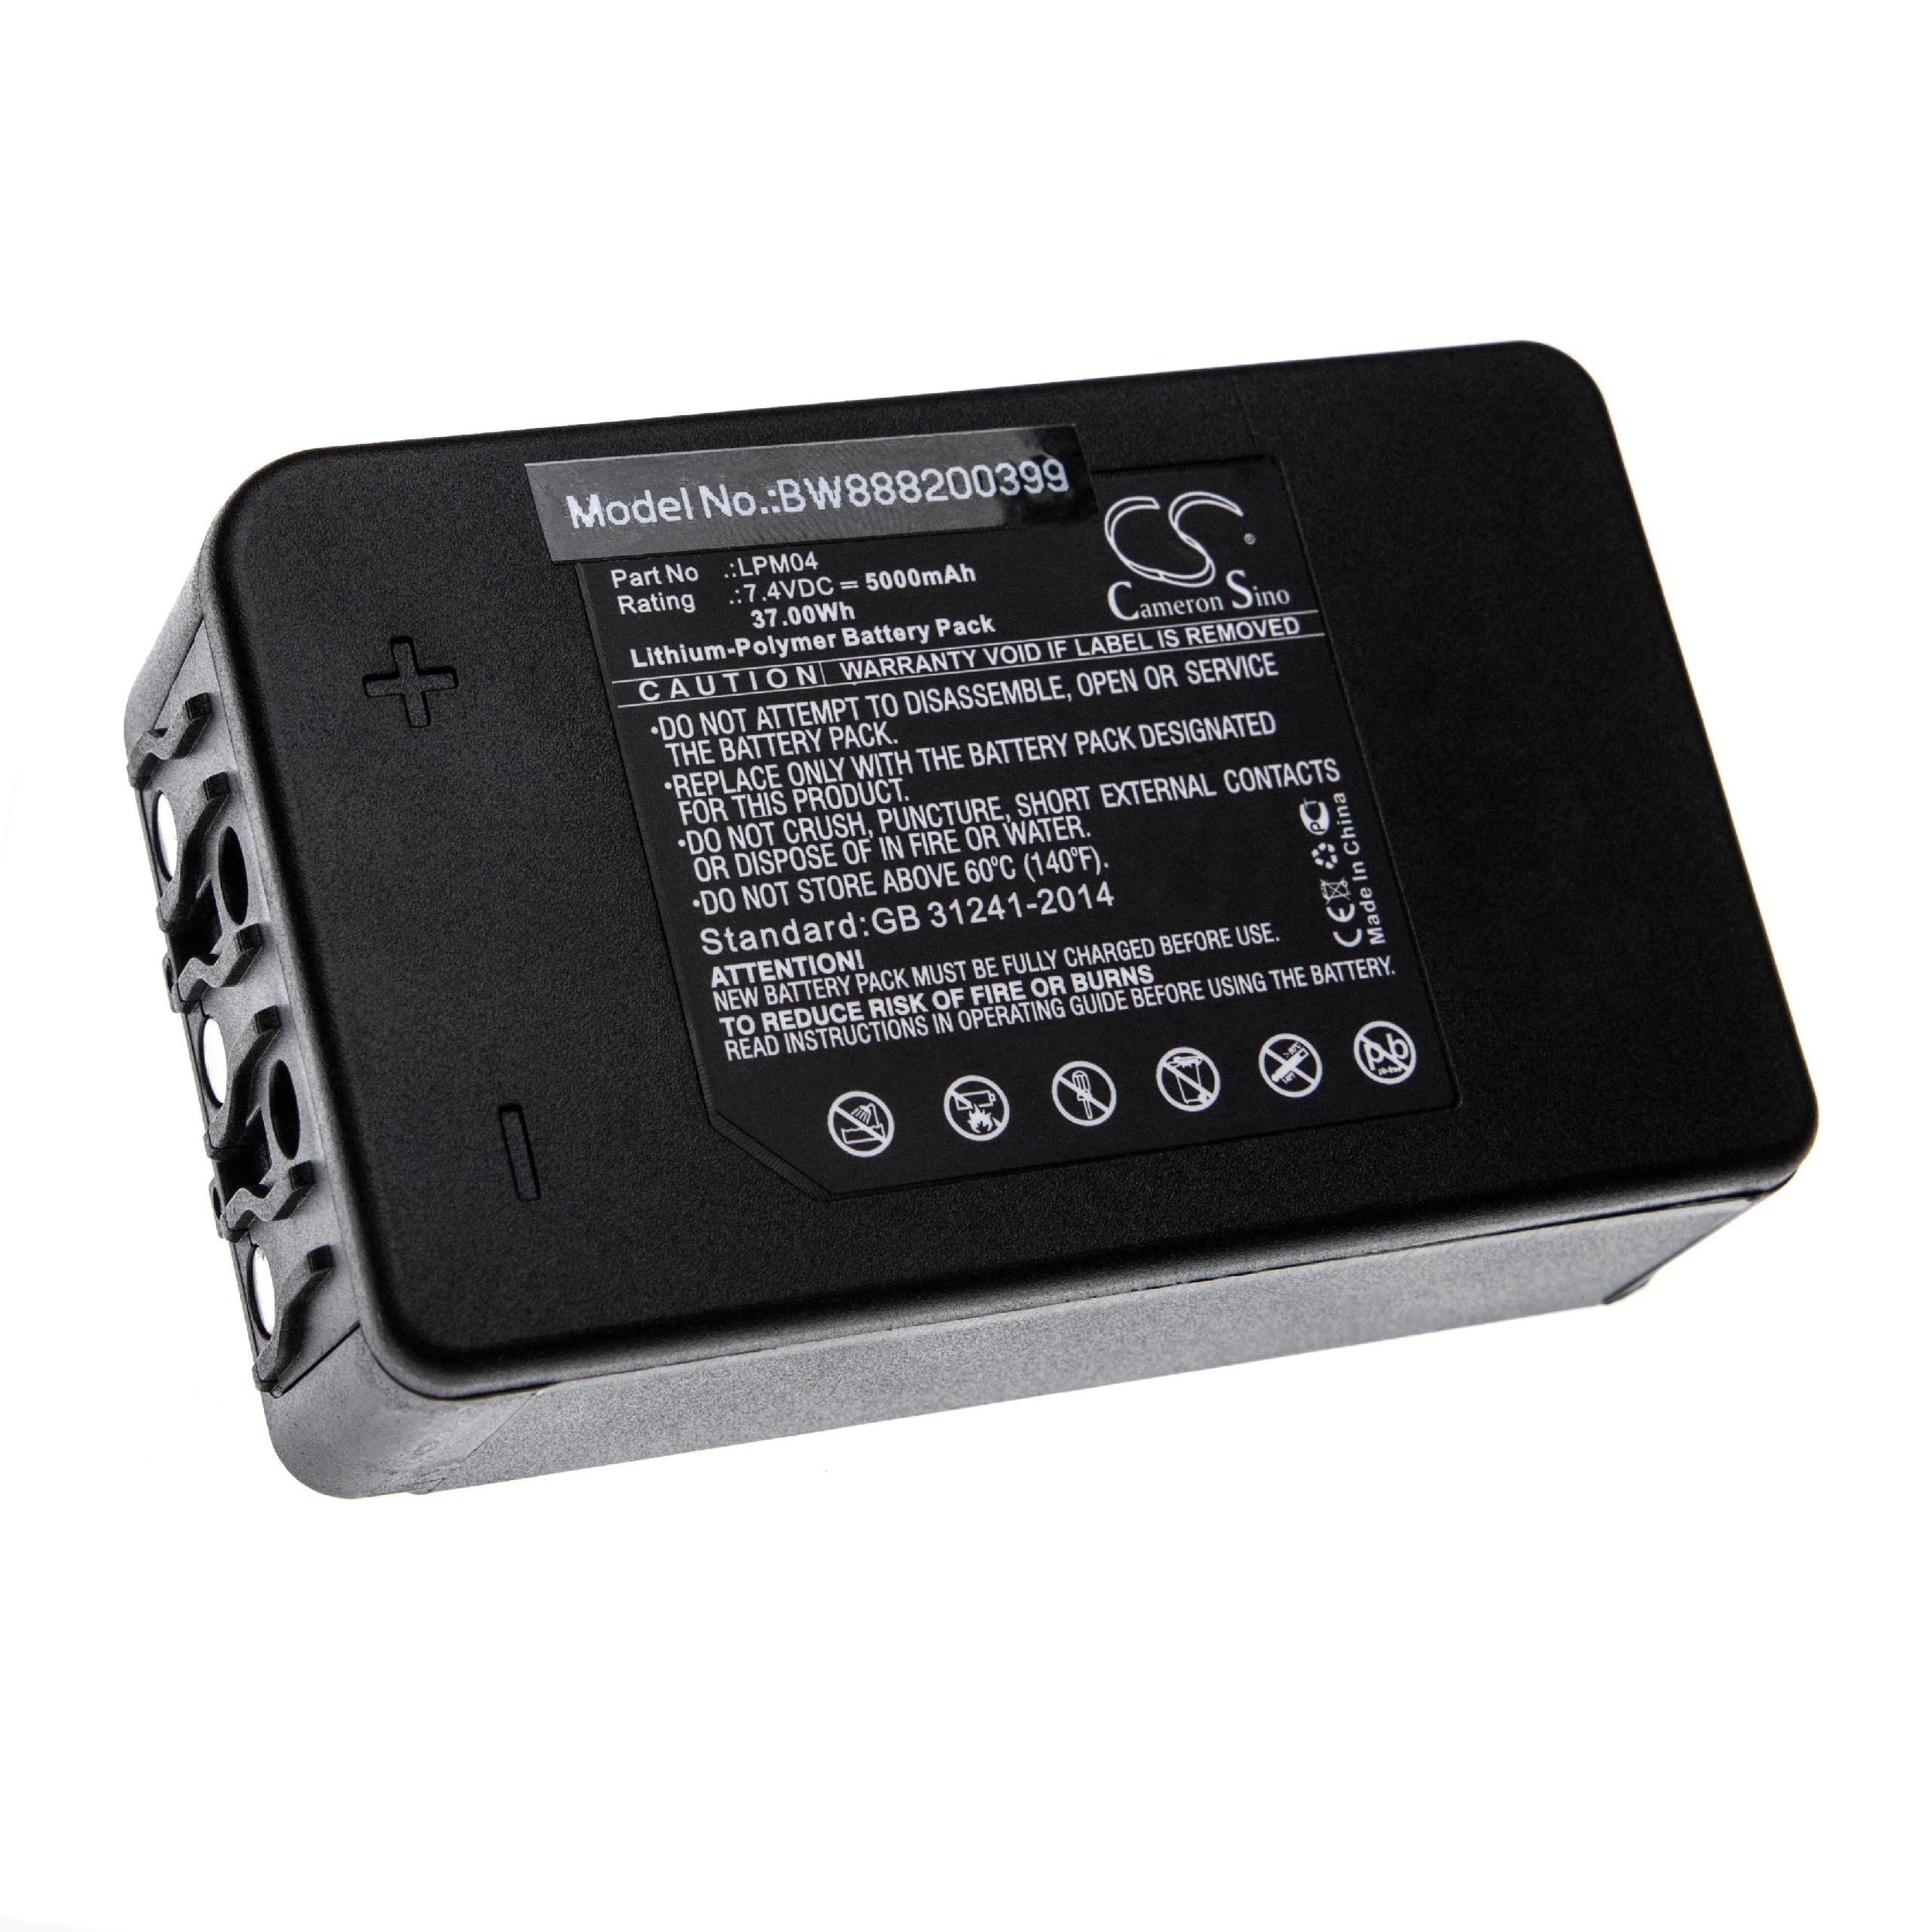 Industrial Remote Control Battery Replacement for Autec R0BATT00E12A0, LPM04 - 5000mAh 7.4V Li-polymer